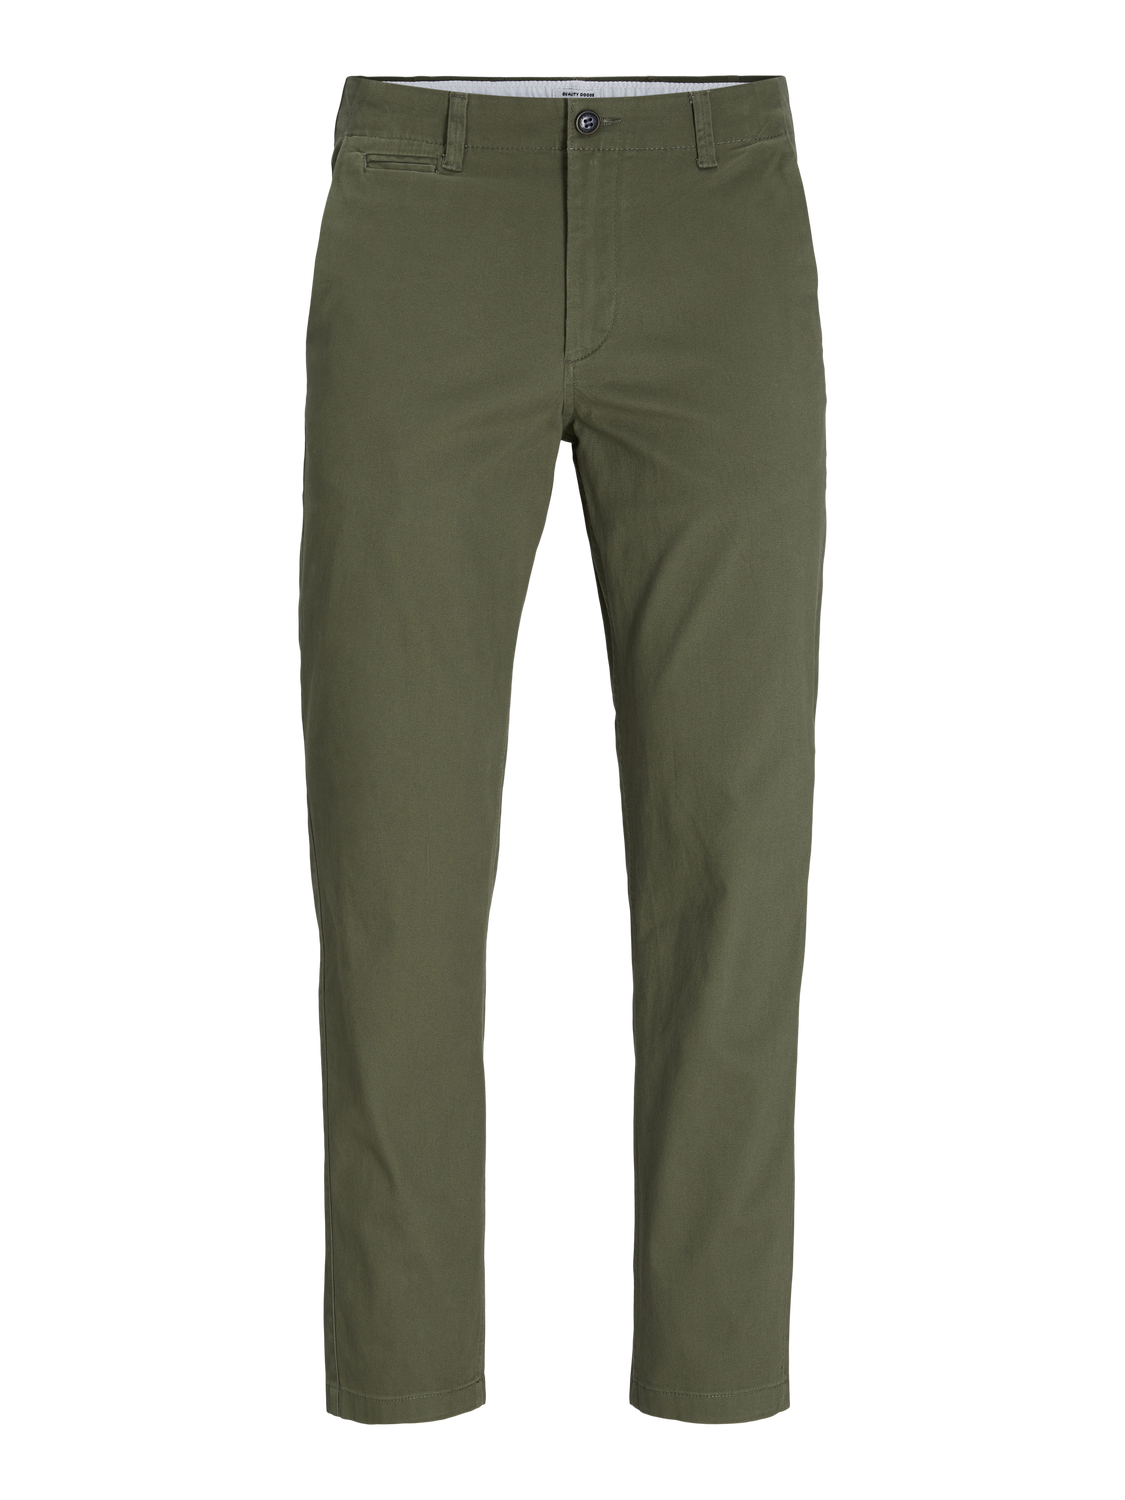 Jack & Jones Slim Fit Spodnie chino -Olive Night - 12254931